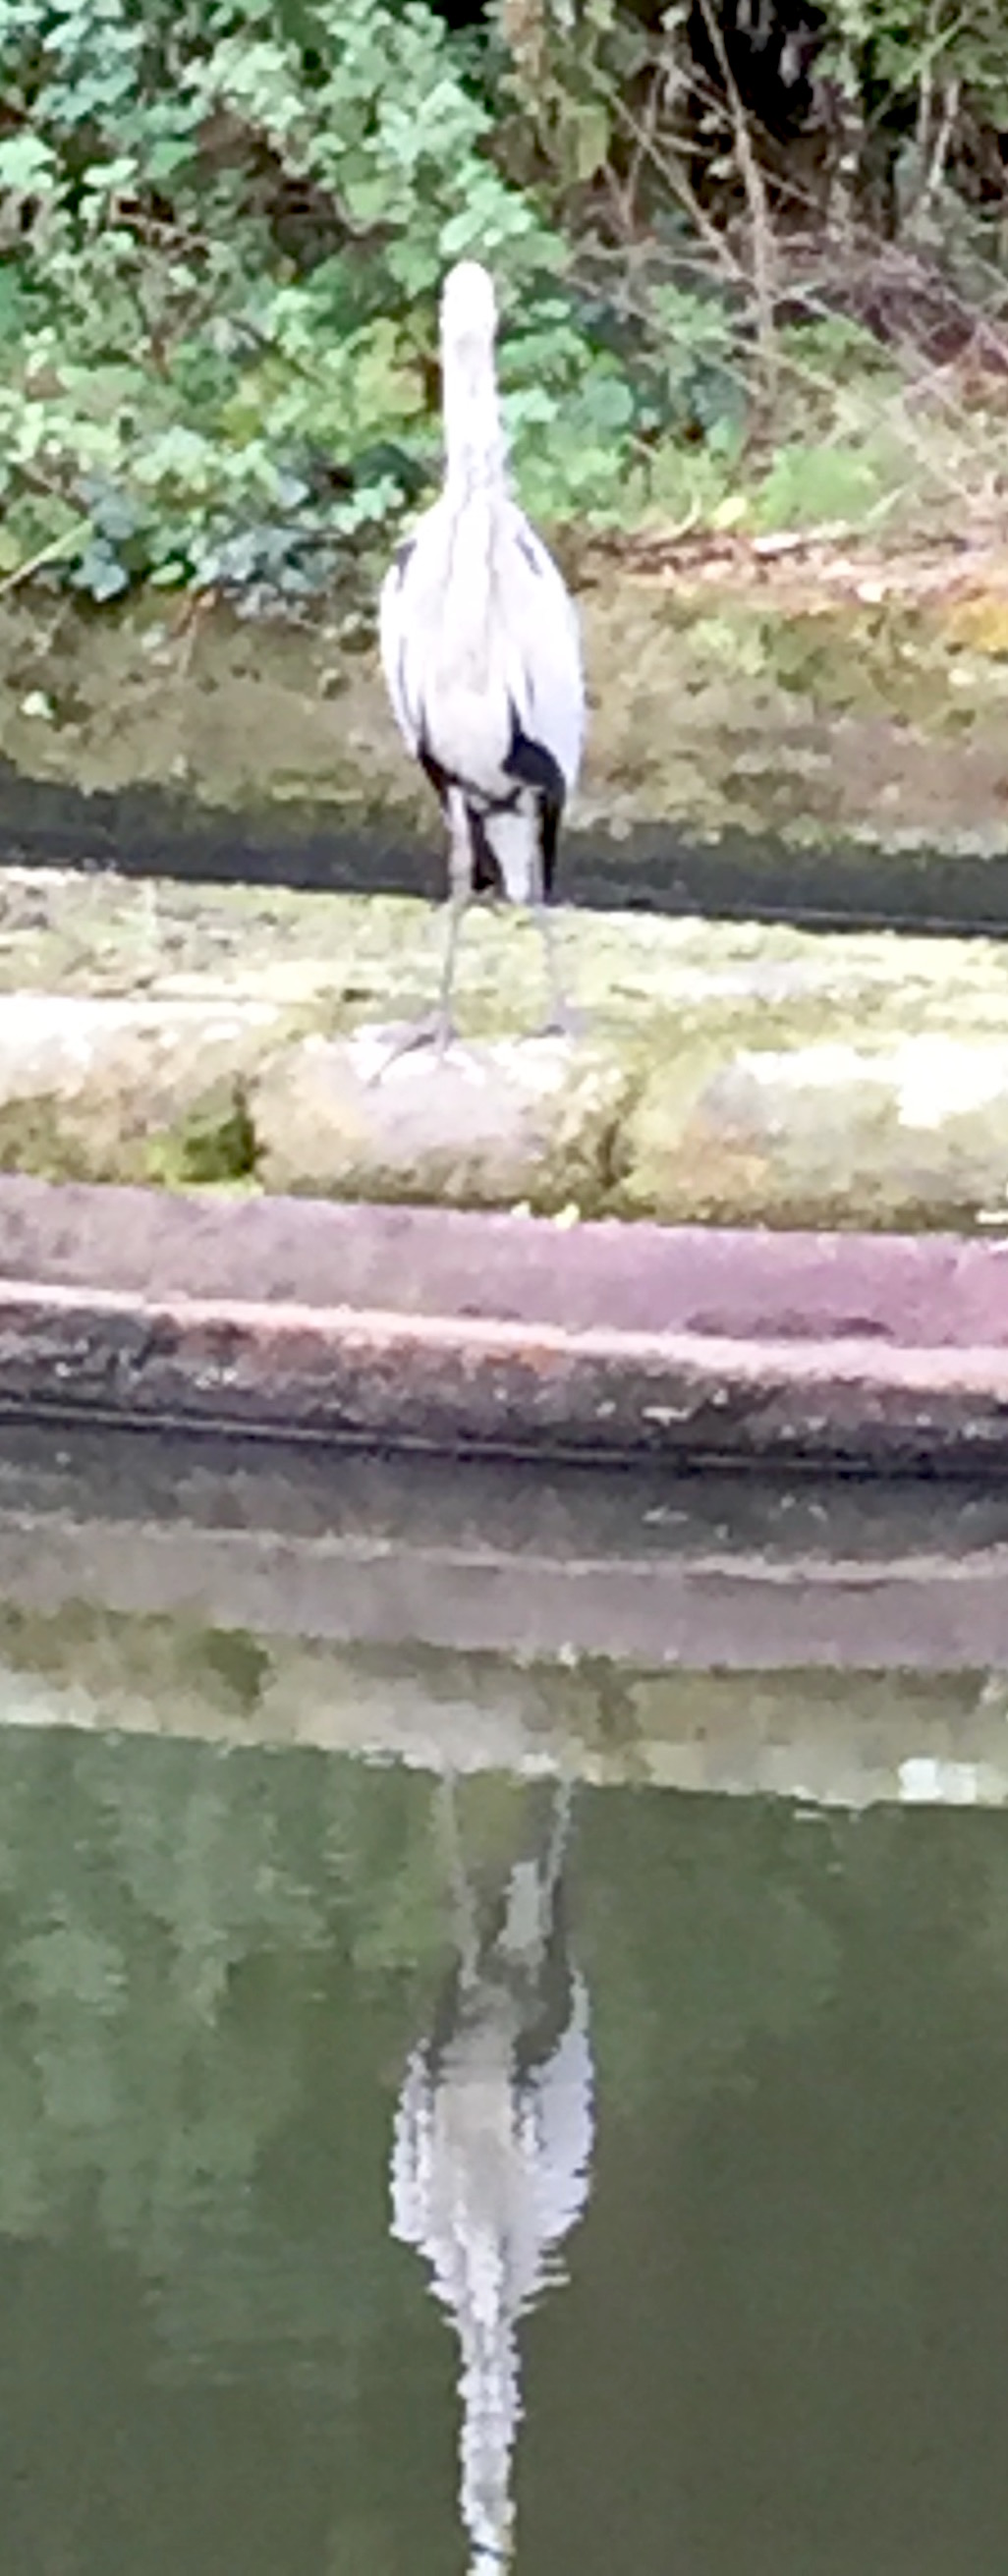 A heron fishing on the Birmingham main line canal